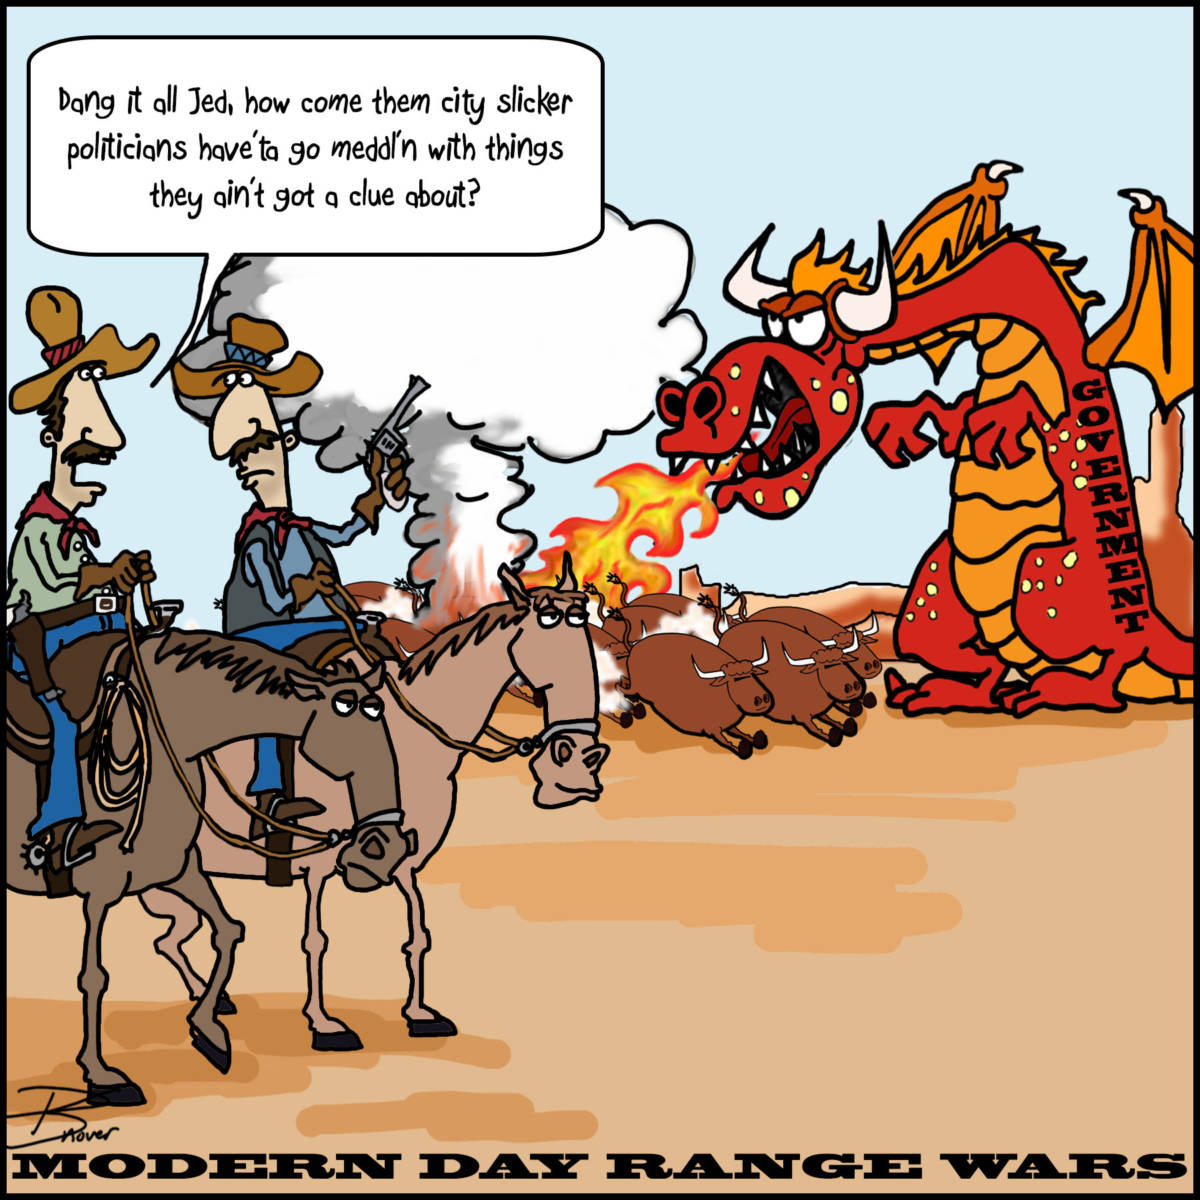 Cartoon: "Modern Day Range Wars"